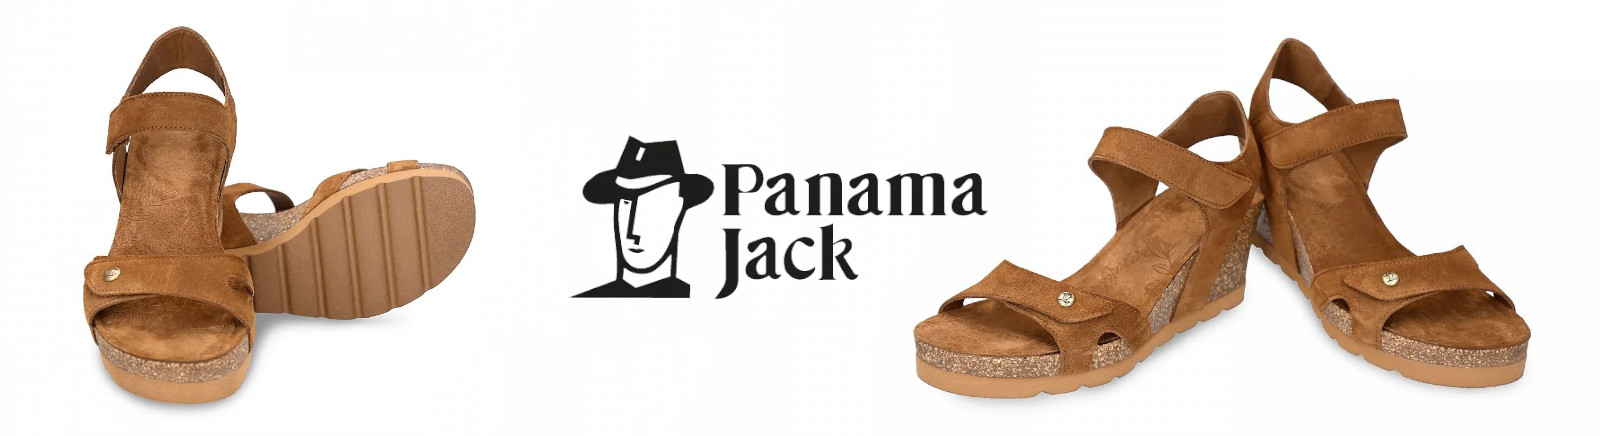 Prange: Panama Jack Halbschuhe für Herren online shoppen